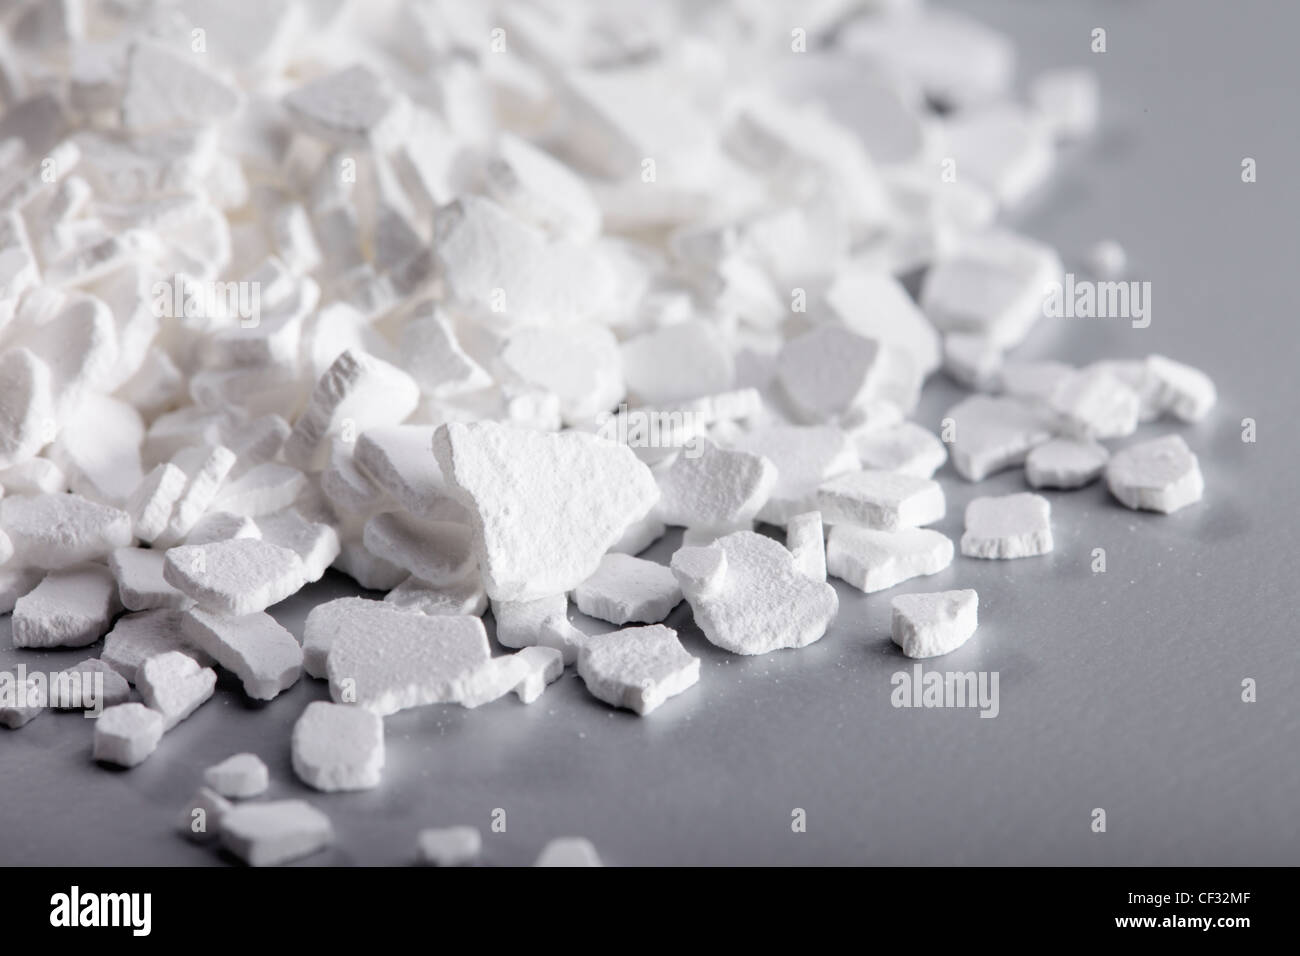 Calcium chloride flakes. Stock Photo